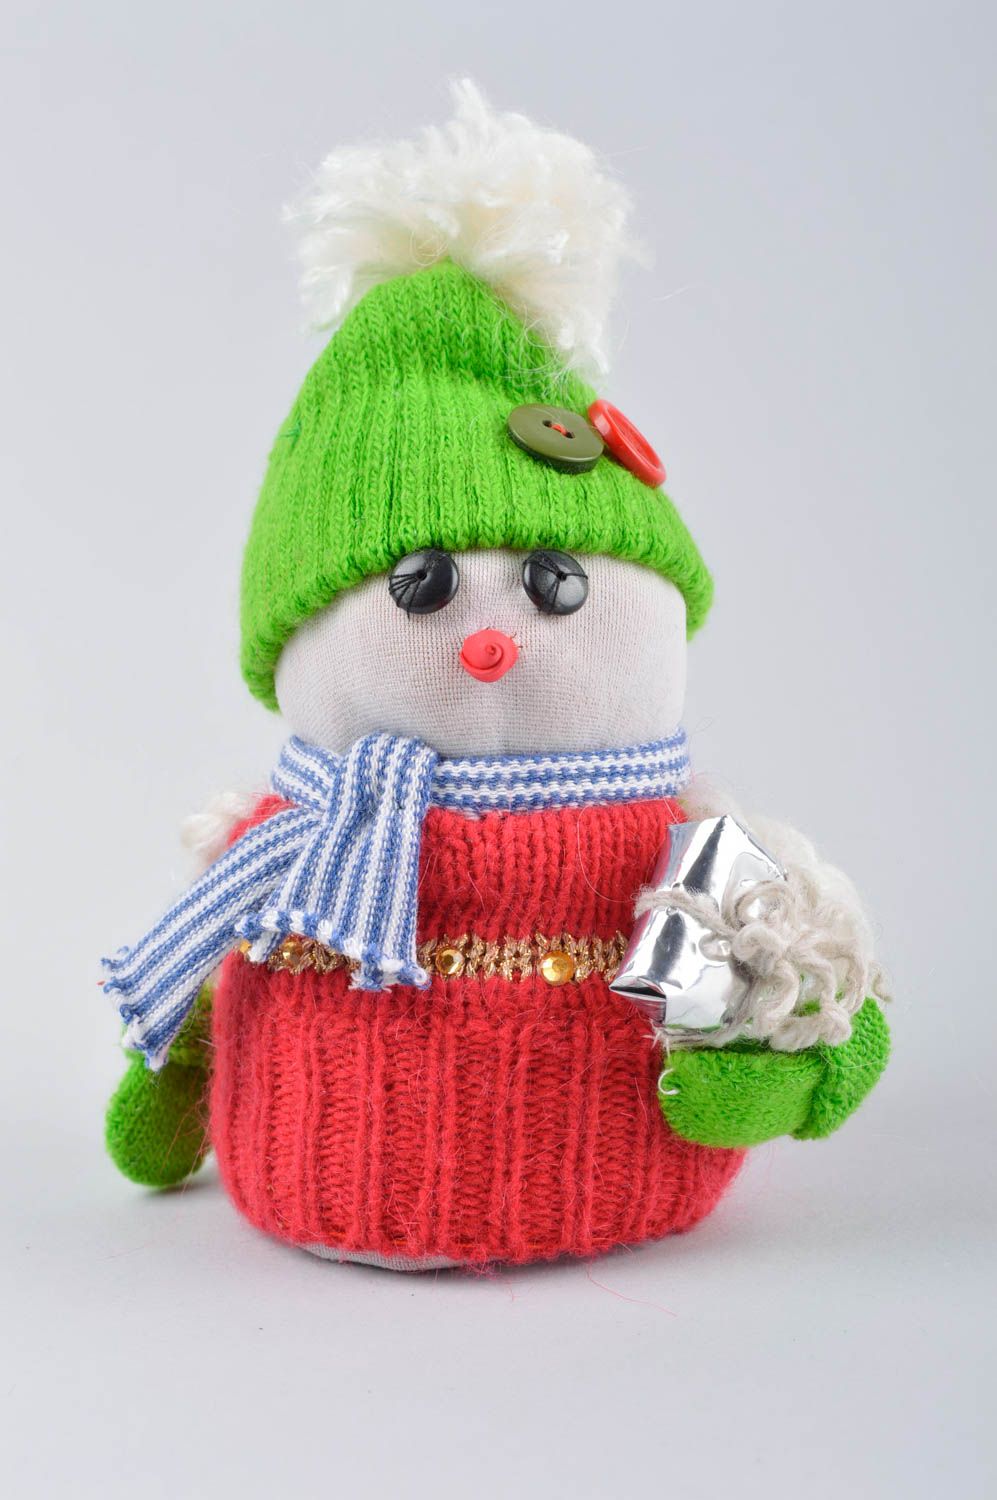 Handmade Christmas decor ideas Christmas stuffed toys decorative use only photo 2